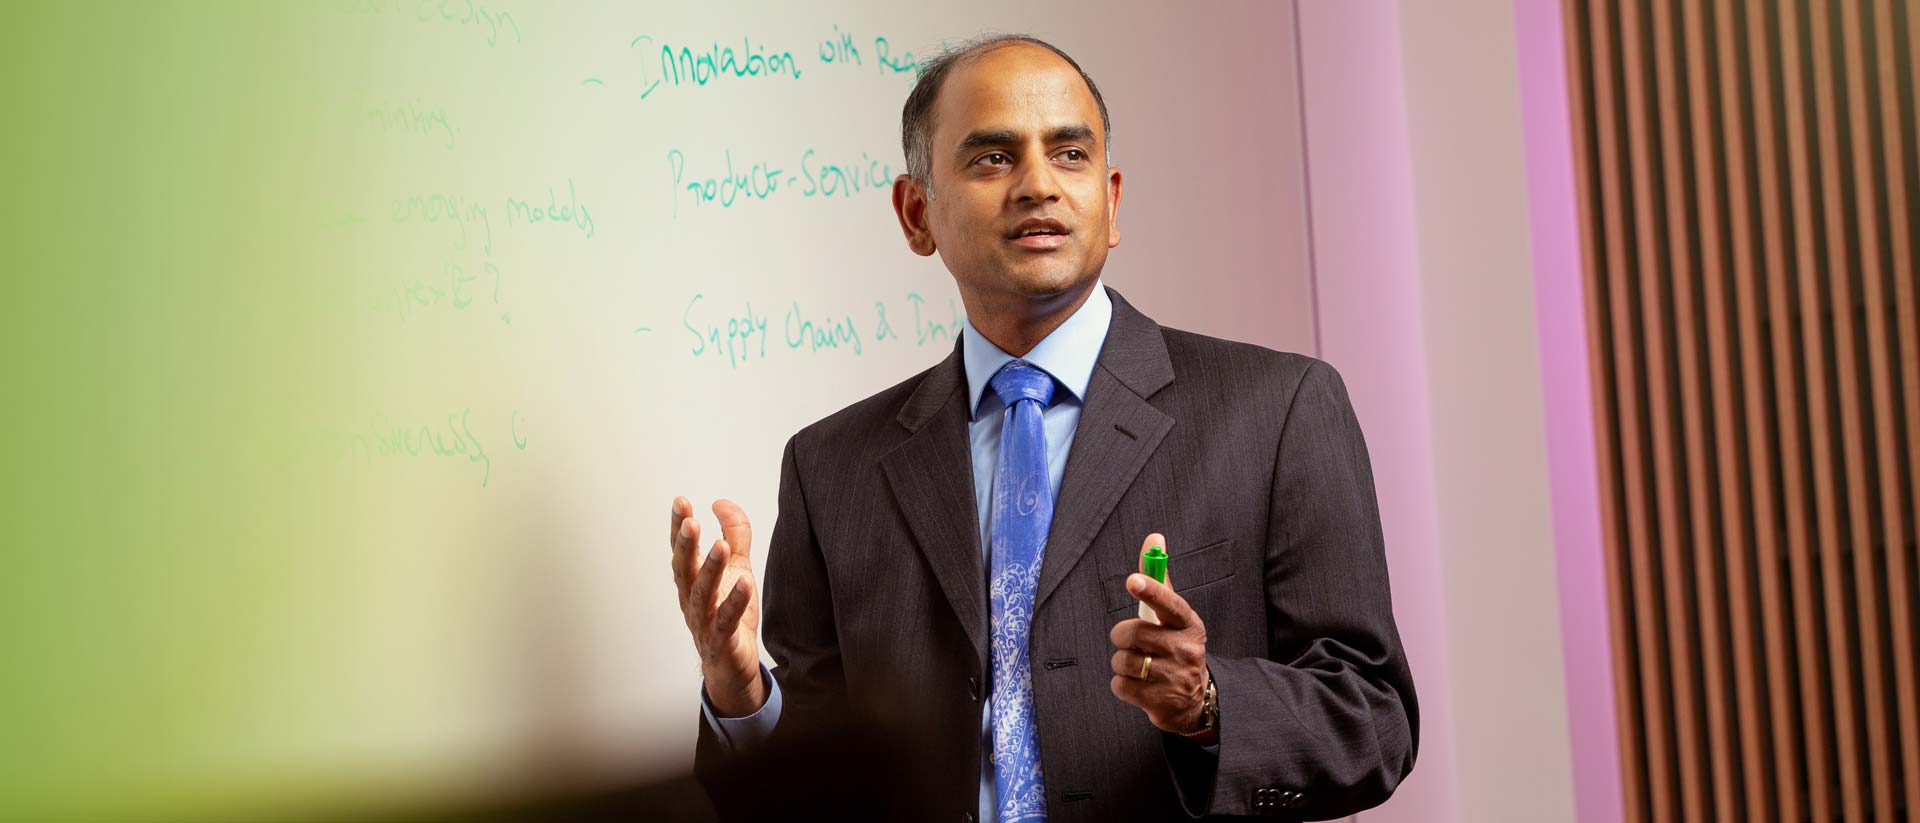 Professor in Supply Chain Management Sriram Narayanan teaches in a classroom inside the Edward J. Minskoff Pavilion